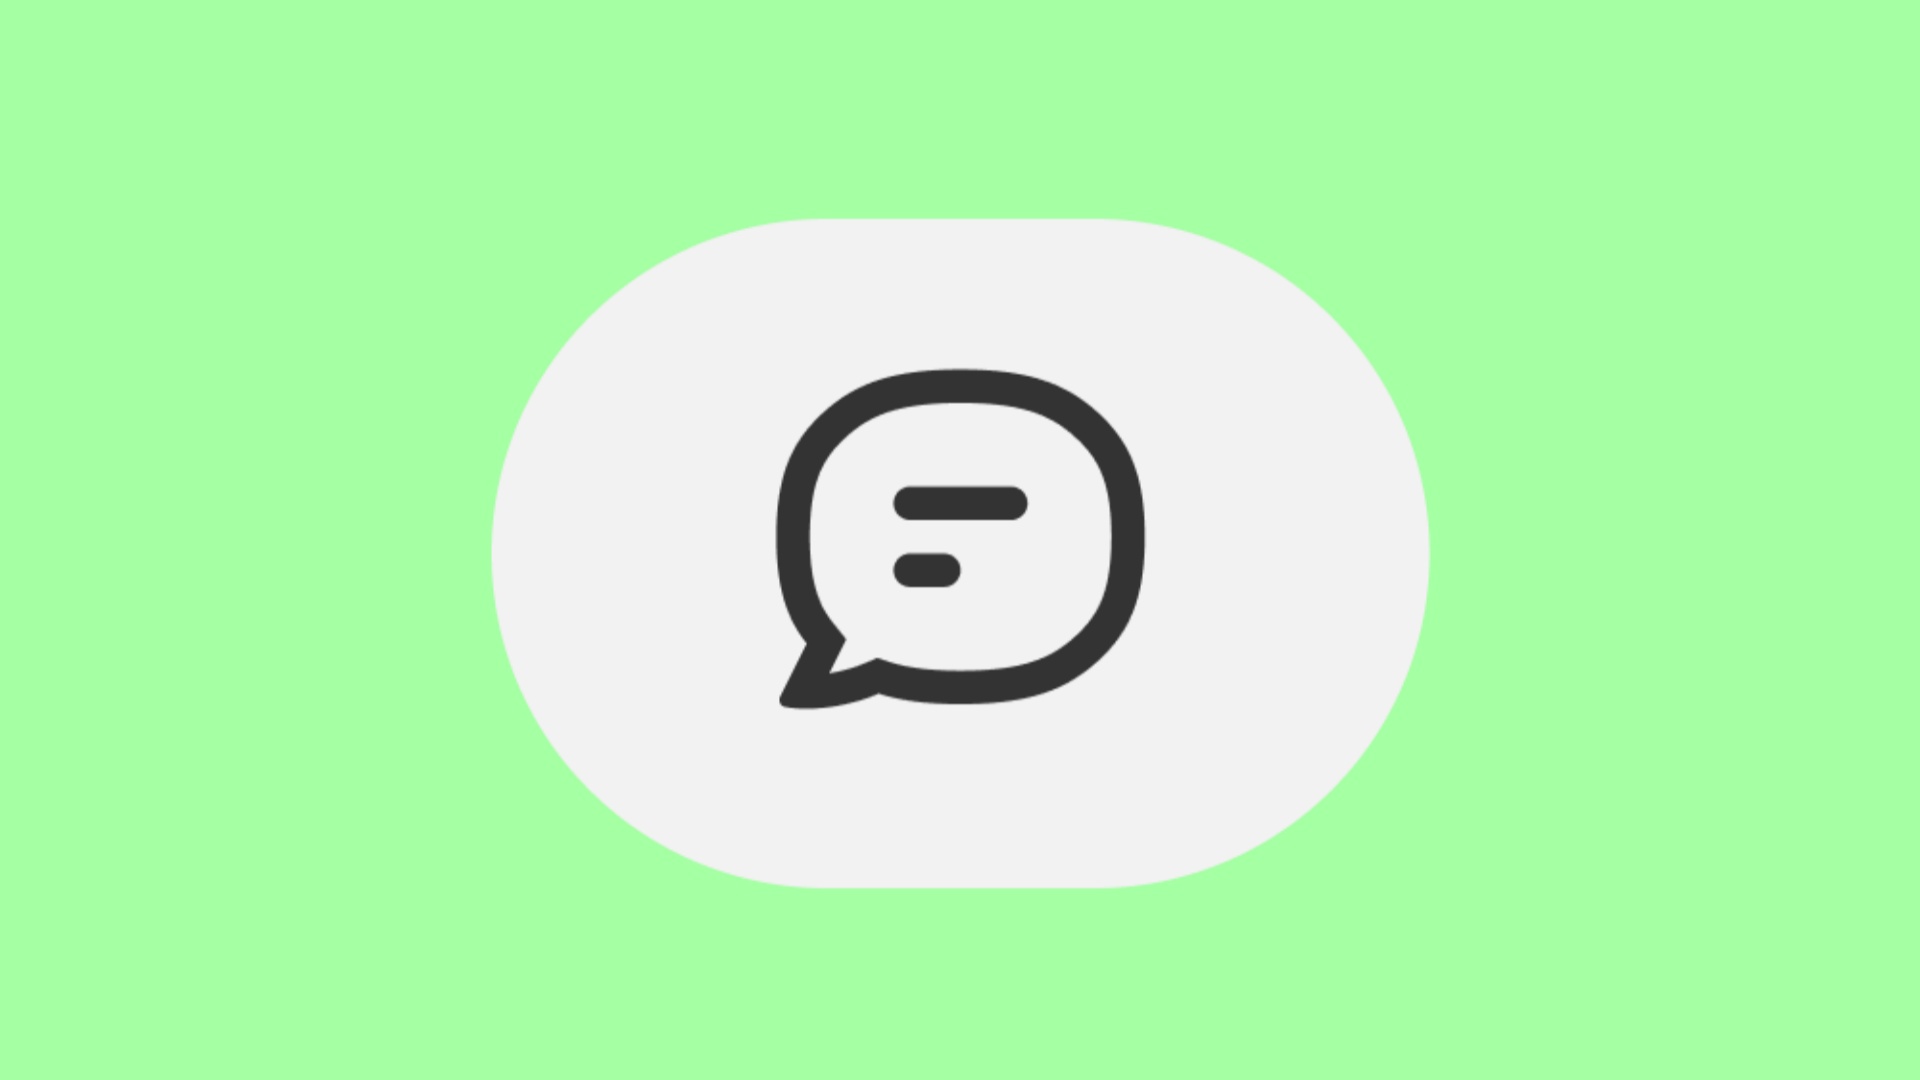 App za chat